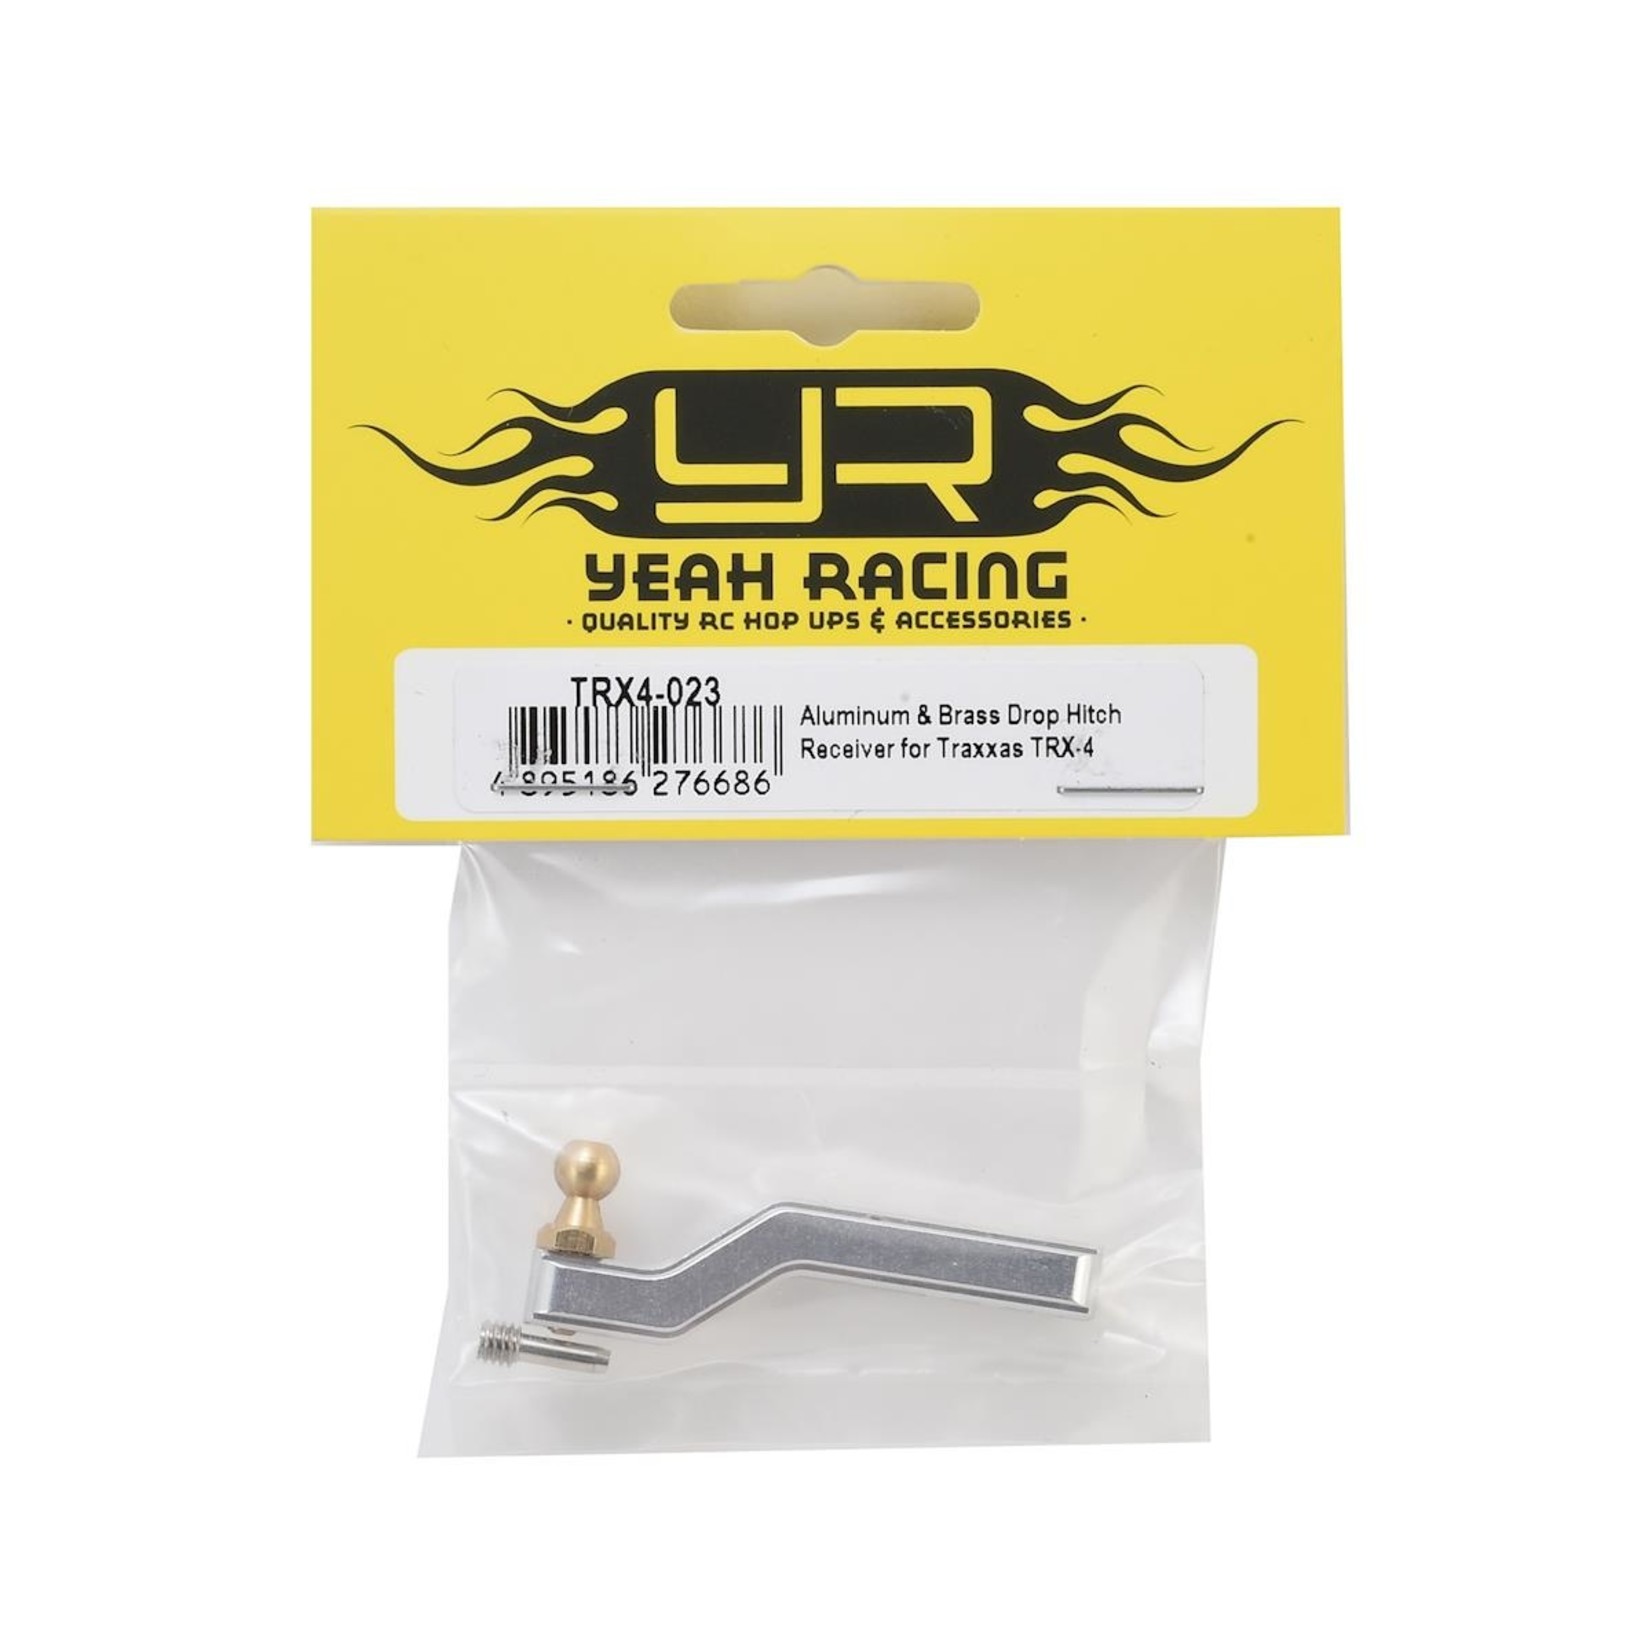 Yeah Racing Yeah Racing Traxxas TRX-4 Aluminum & Brass Drop Hitch Receiver #TRX4-023